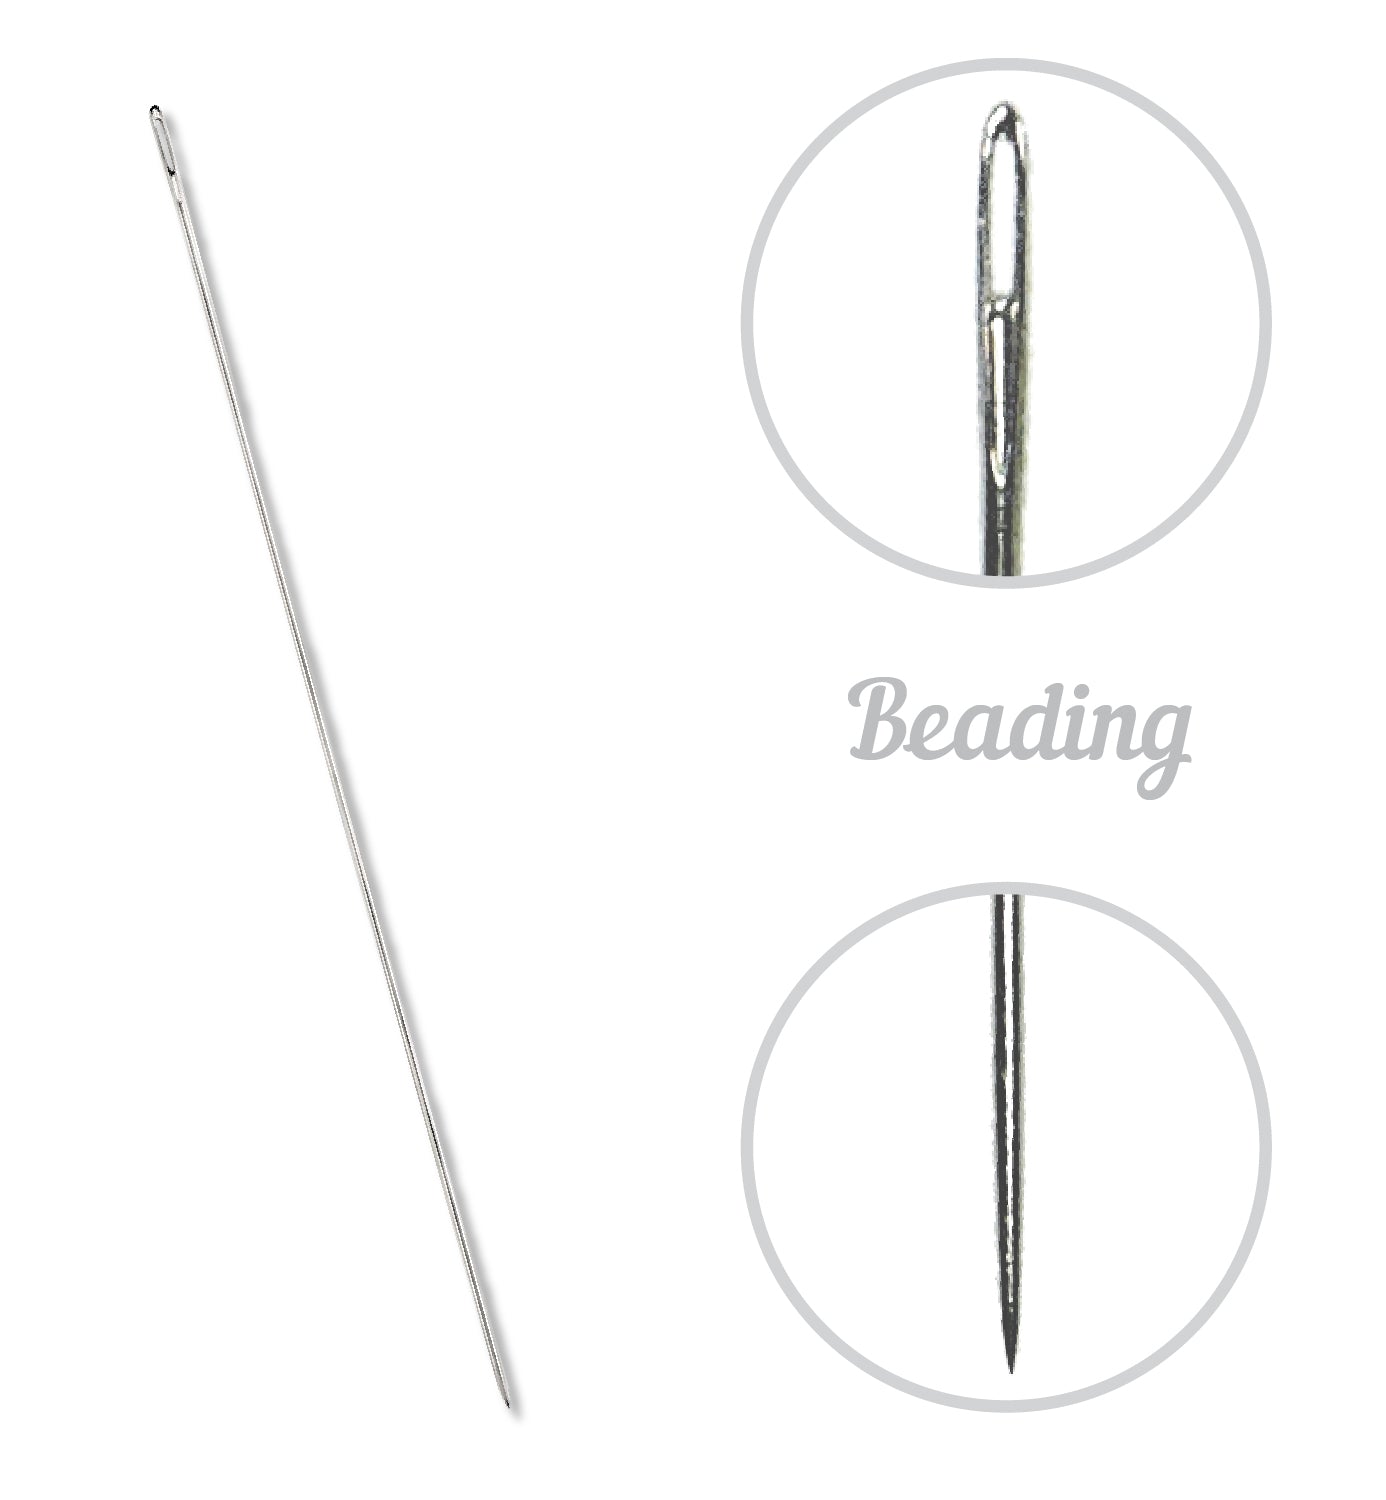 Colonial Needle Beading Hand Needles-Size 10/13 4/Pkg